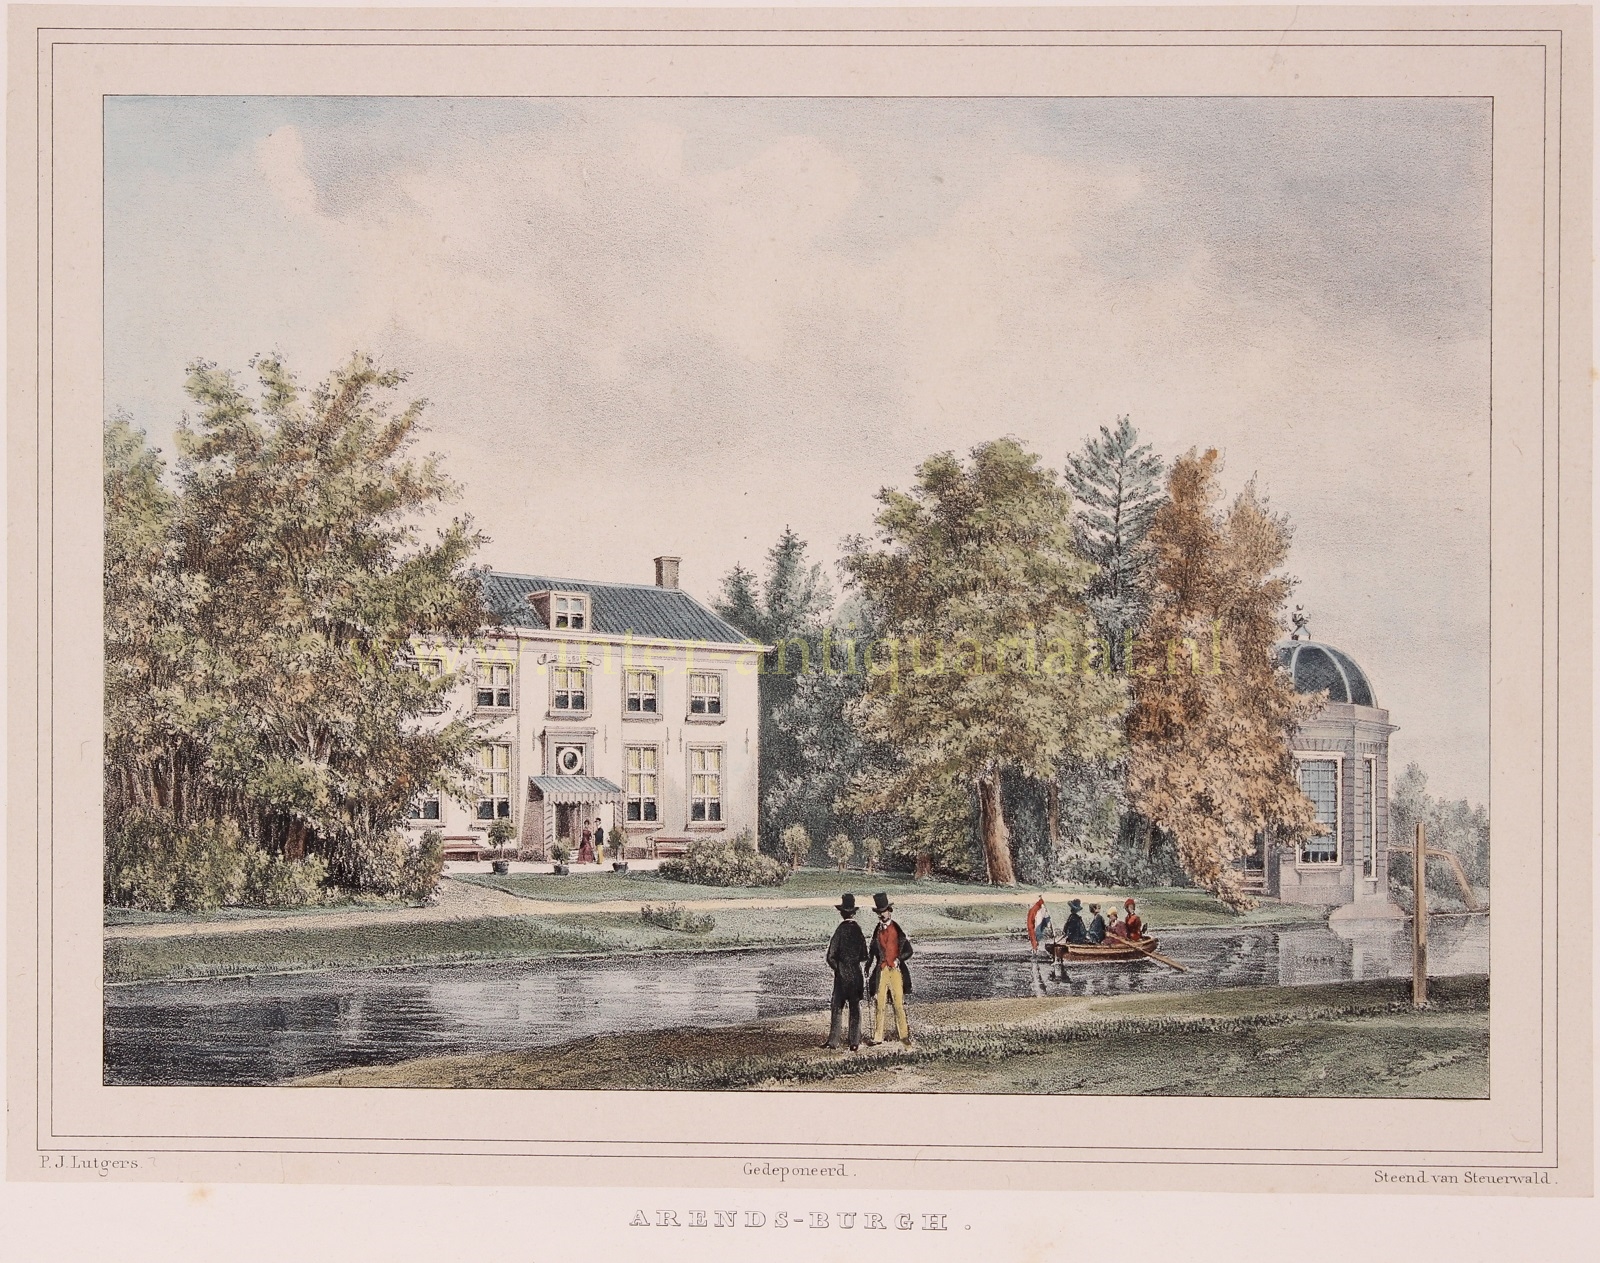  - Arentsburg (Voorburg) - Petrus Josephus Lutgers, 1855